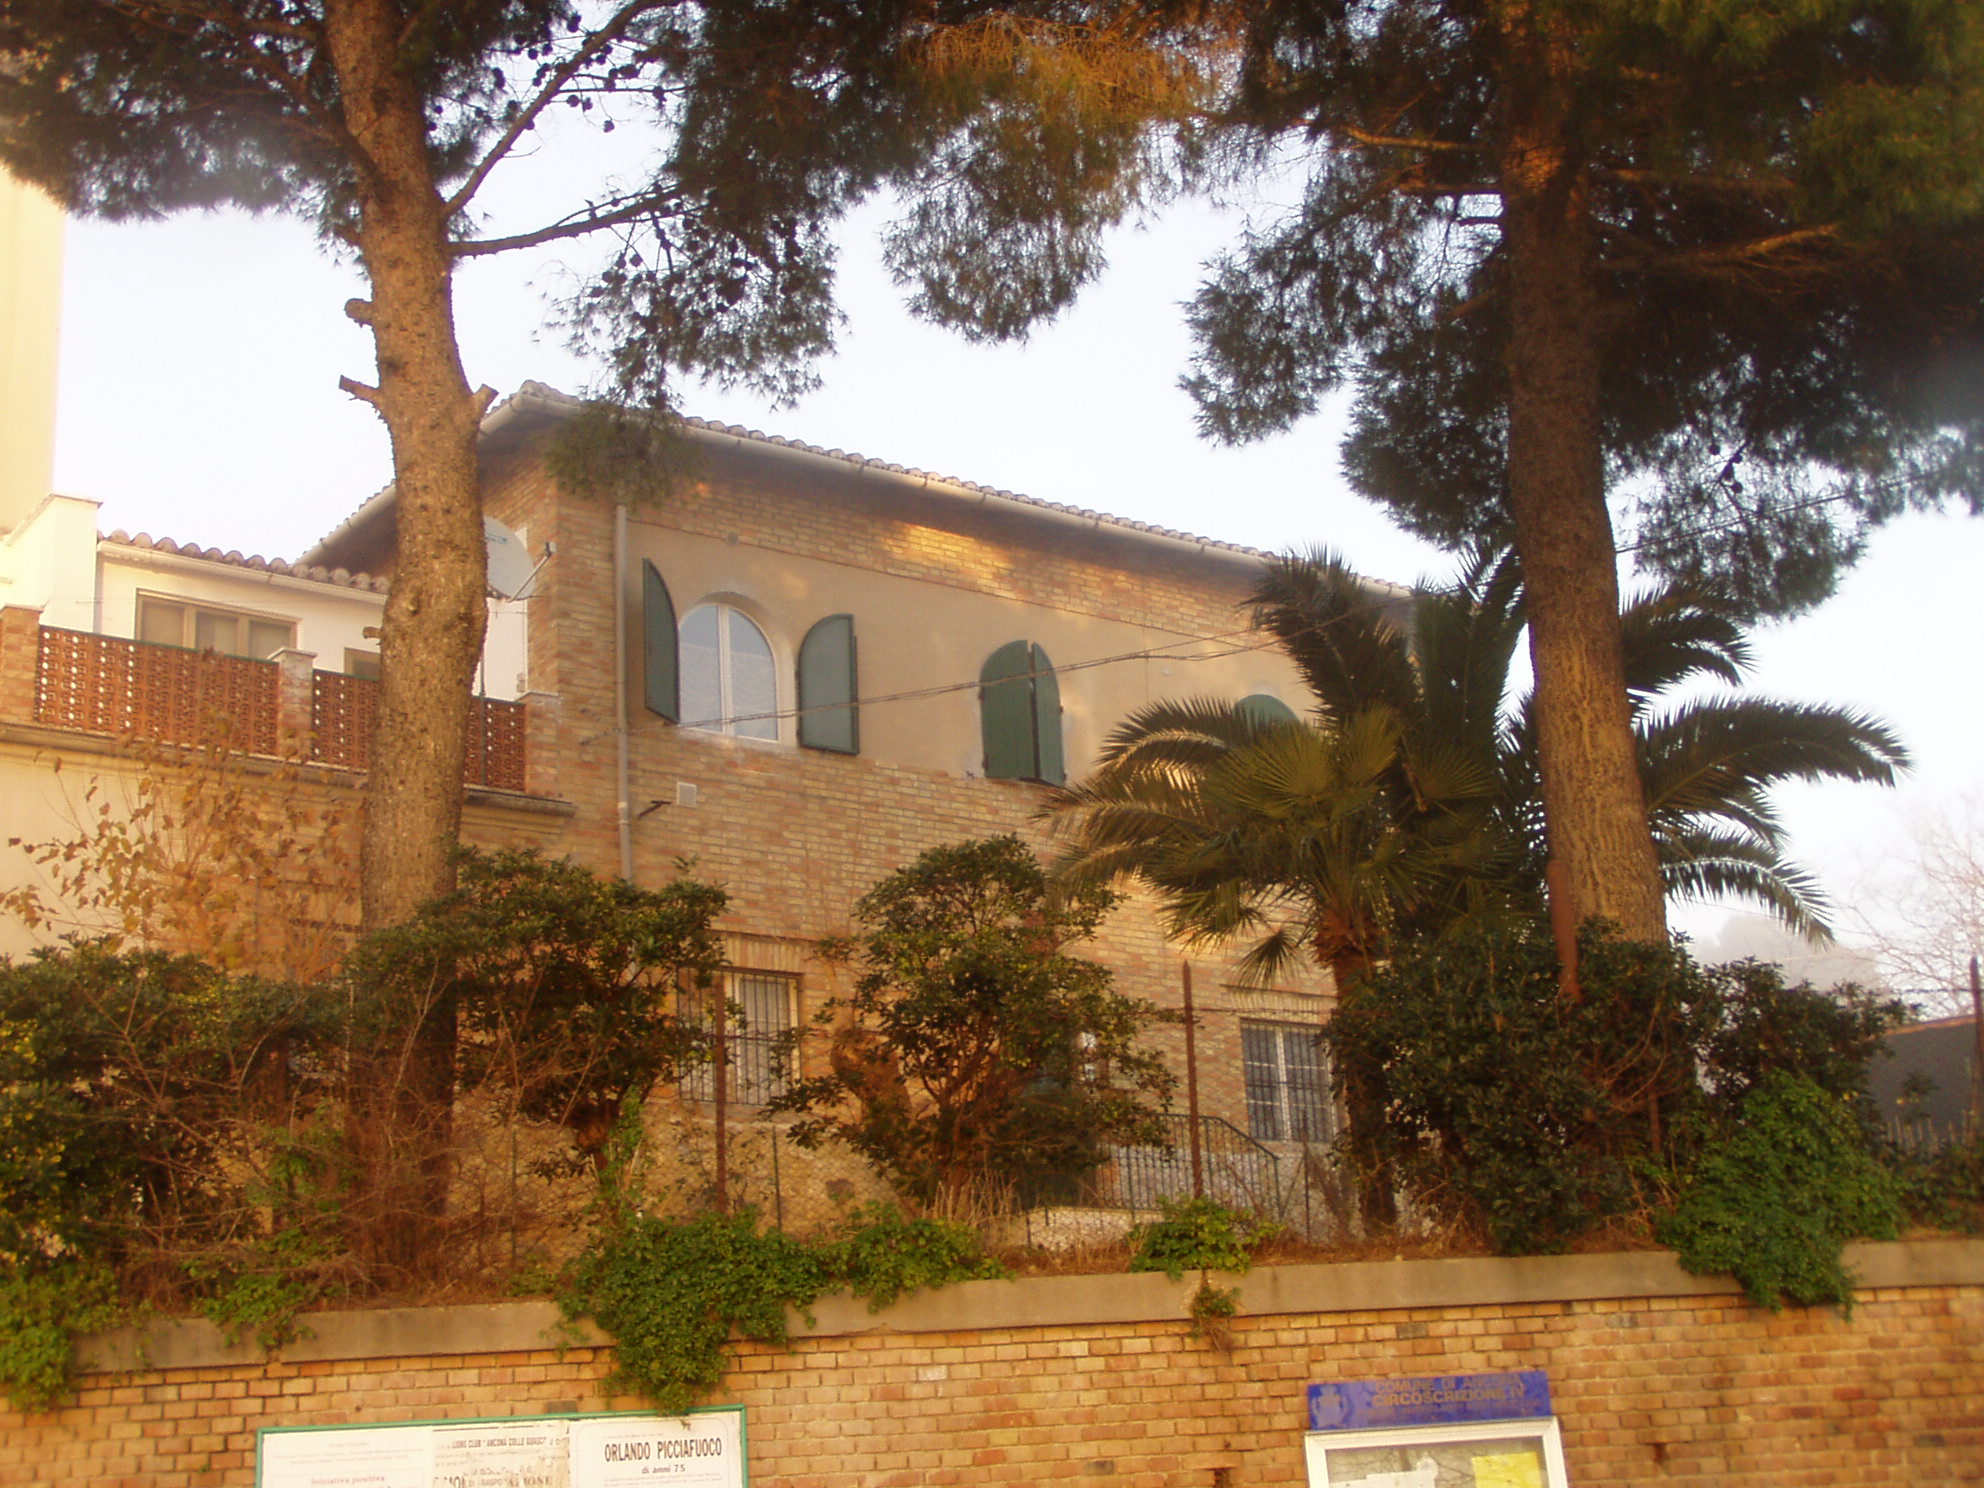 Canonica dei Ss. Filippo e Giacomo (casa canonica) - Ancona (AN) 